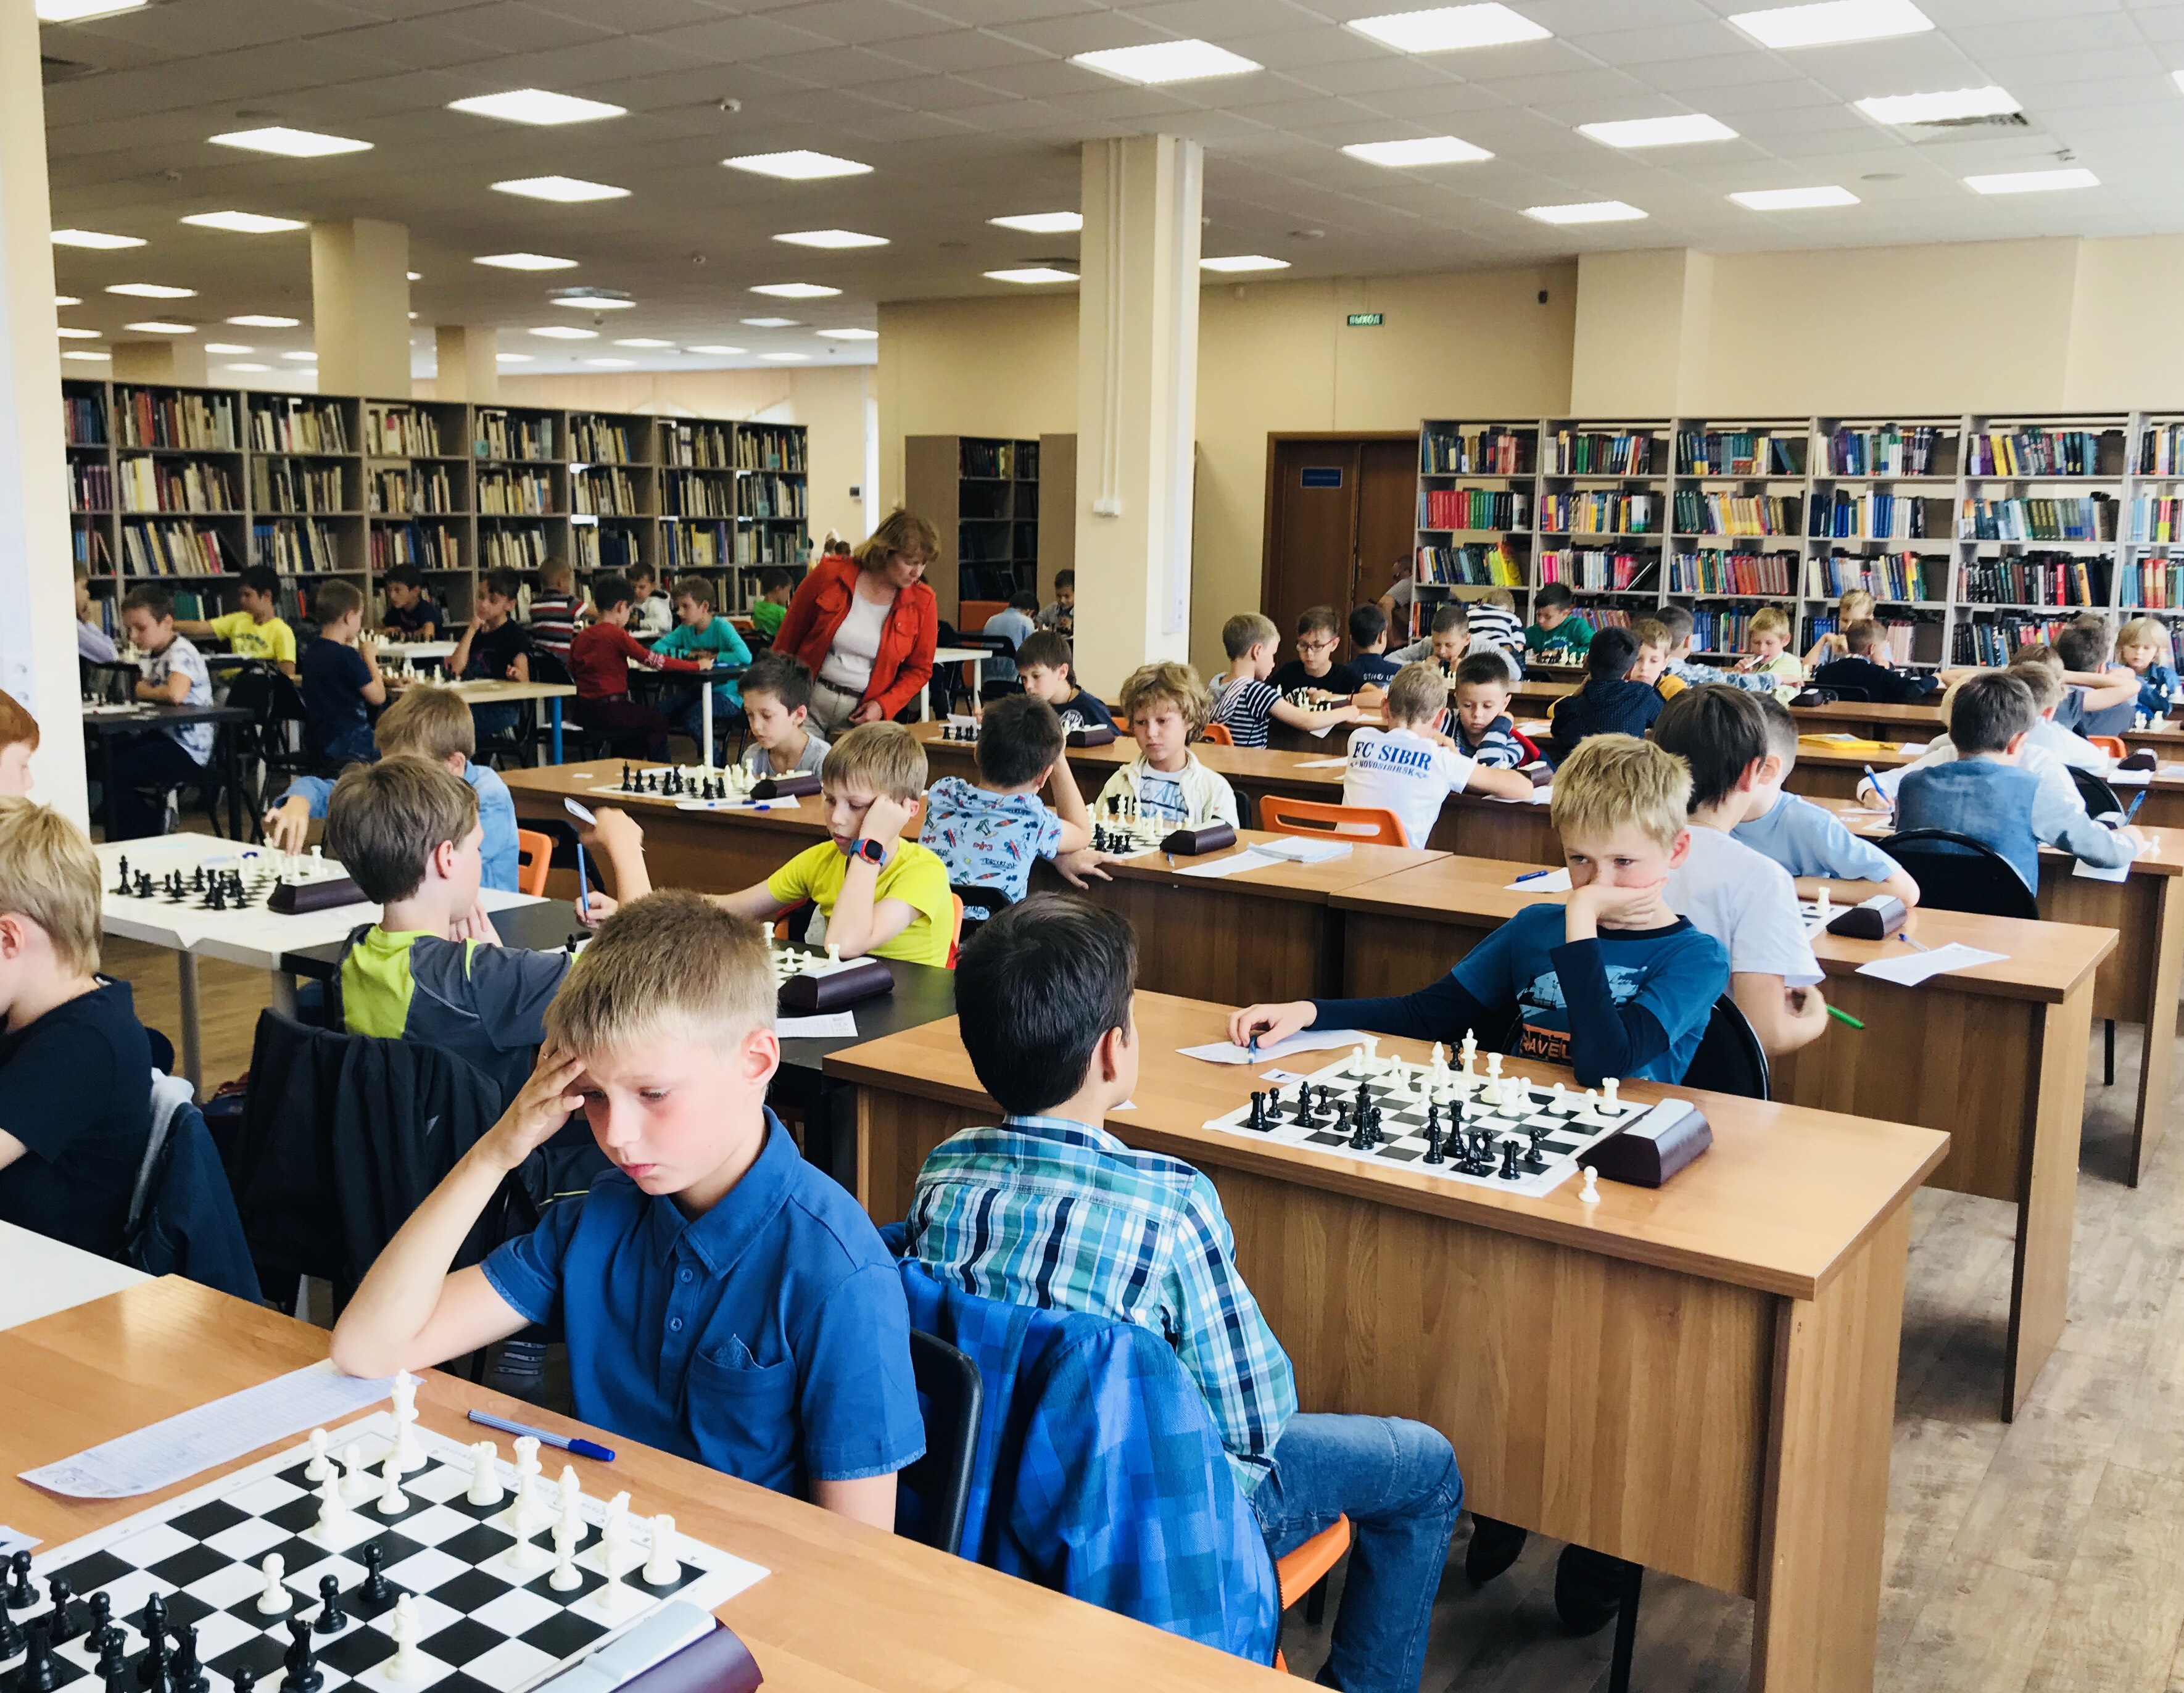 Кубок губернатора Новосибирской области по шахматам, фотография: С. Ясюкевич